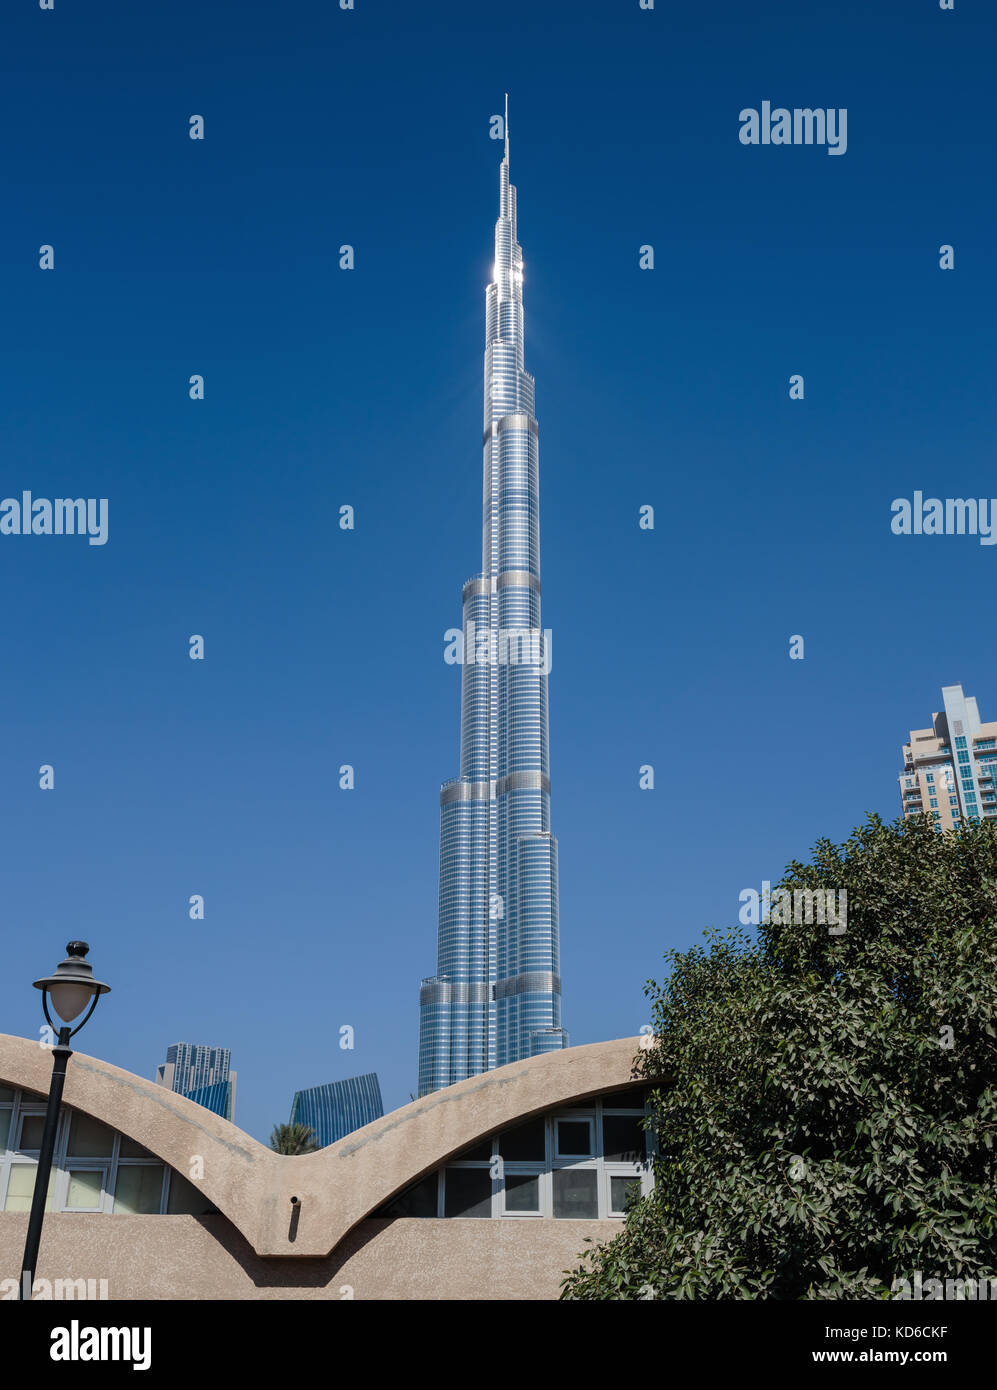 DUBAI, UAE-NOVEMBER 13, 2013: View of Burj Khalifa - the world's tallest tower at Downtown Burj Dubai in Dubai, UAE Stock Photo